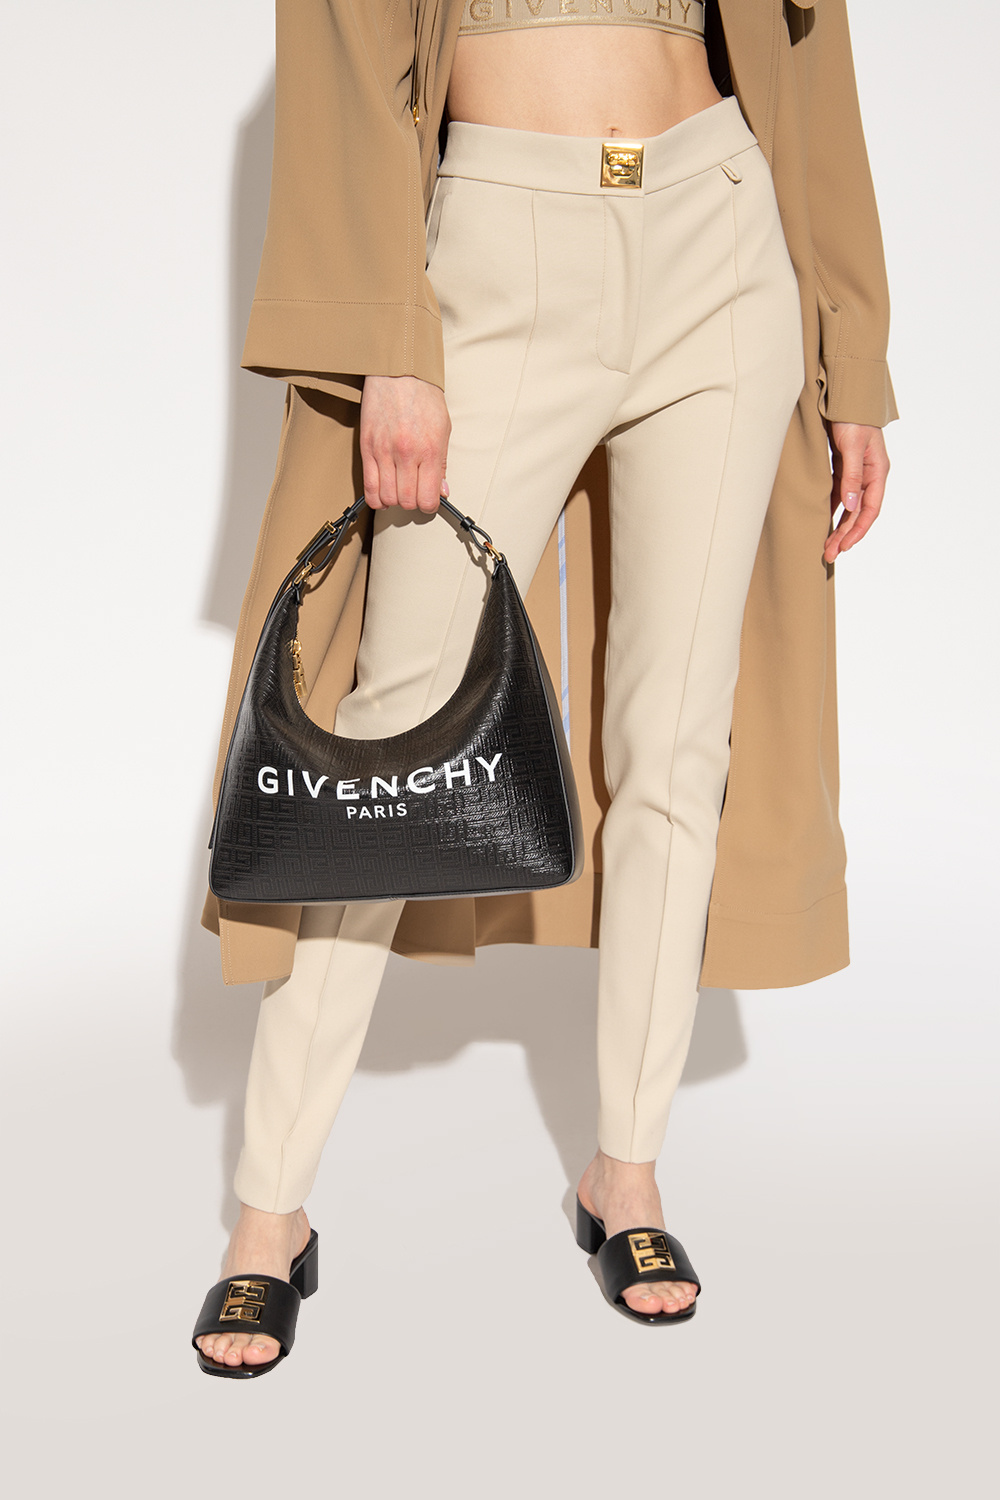 Givenchy Mini Moon Cut-out Crossbody Bag in Orange